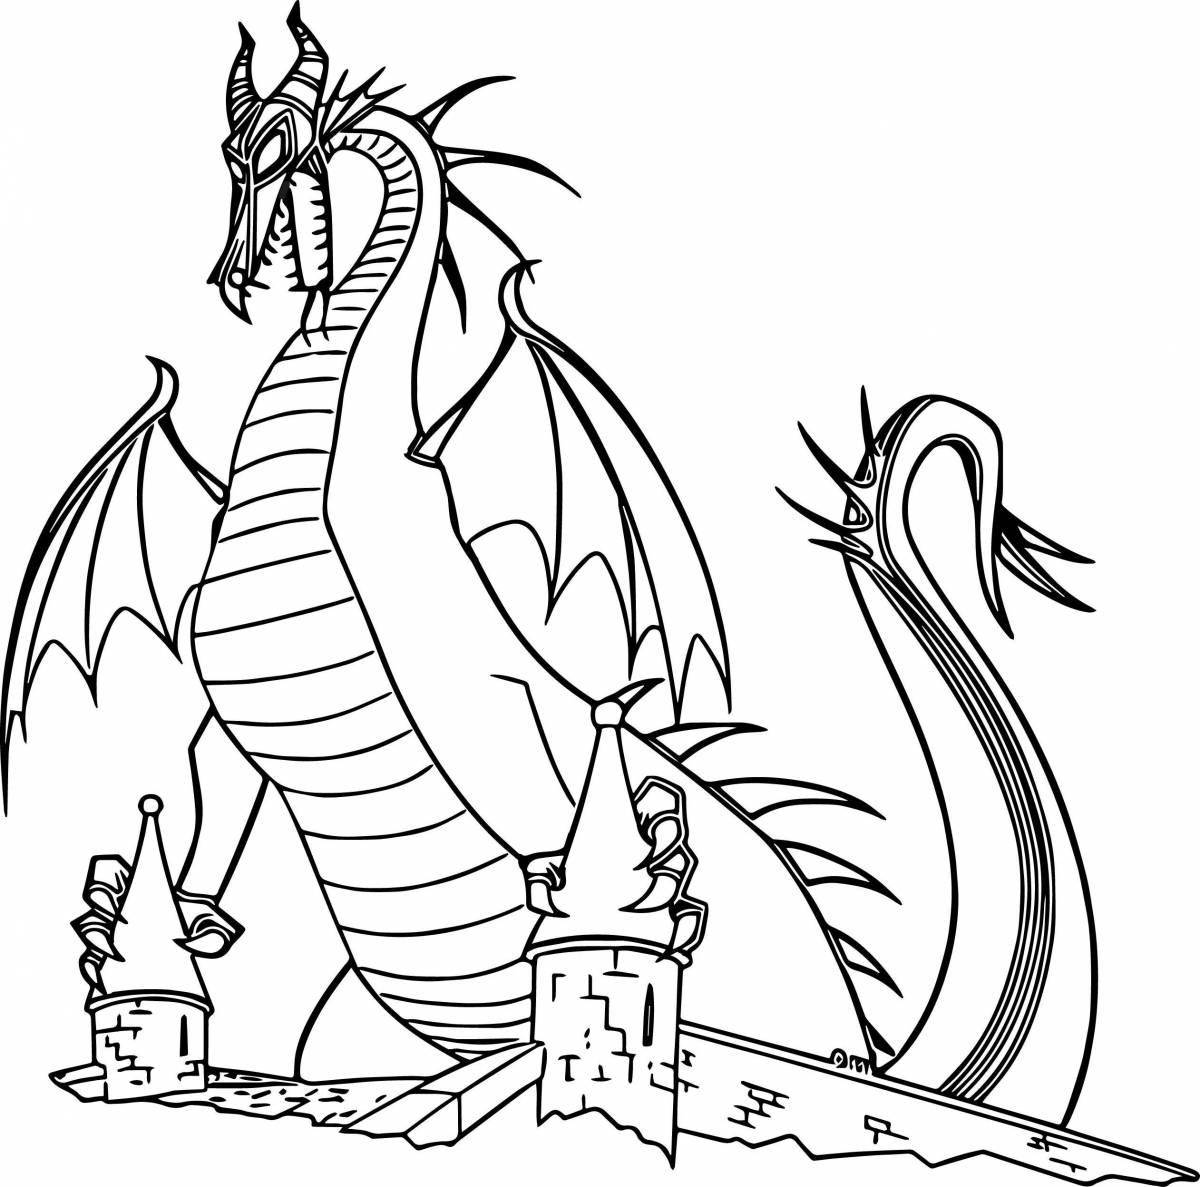 Coloring page beckoning water dragon